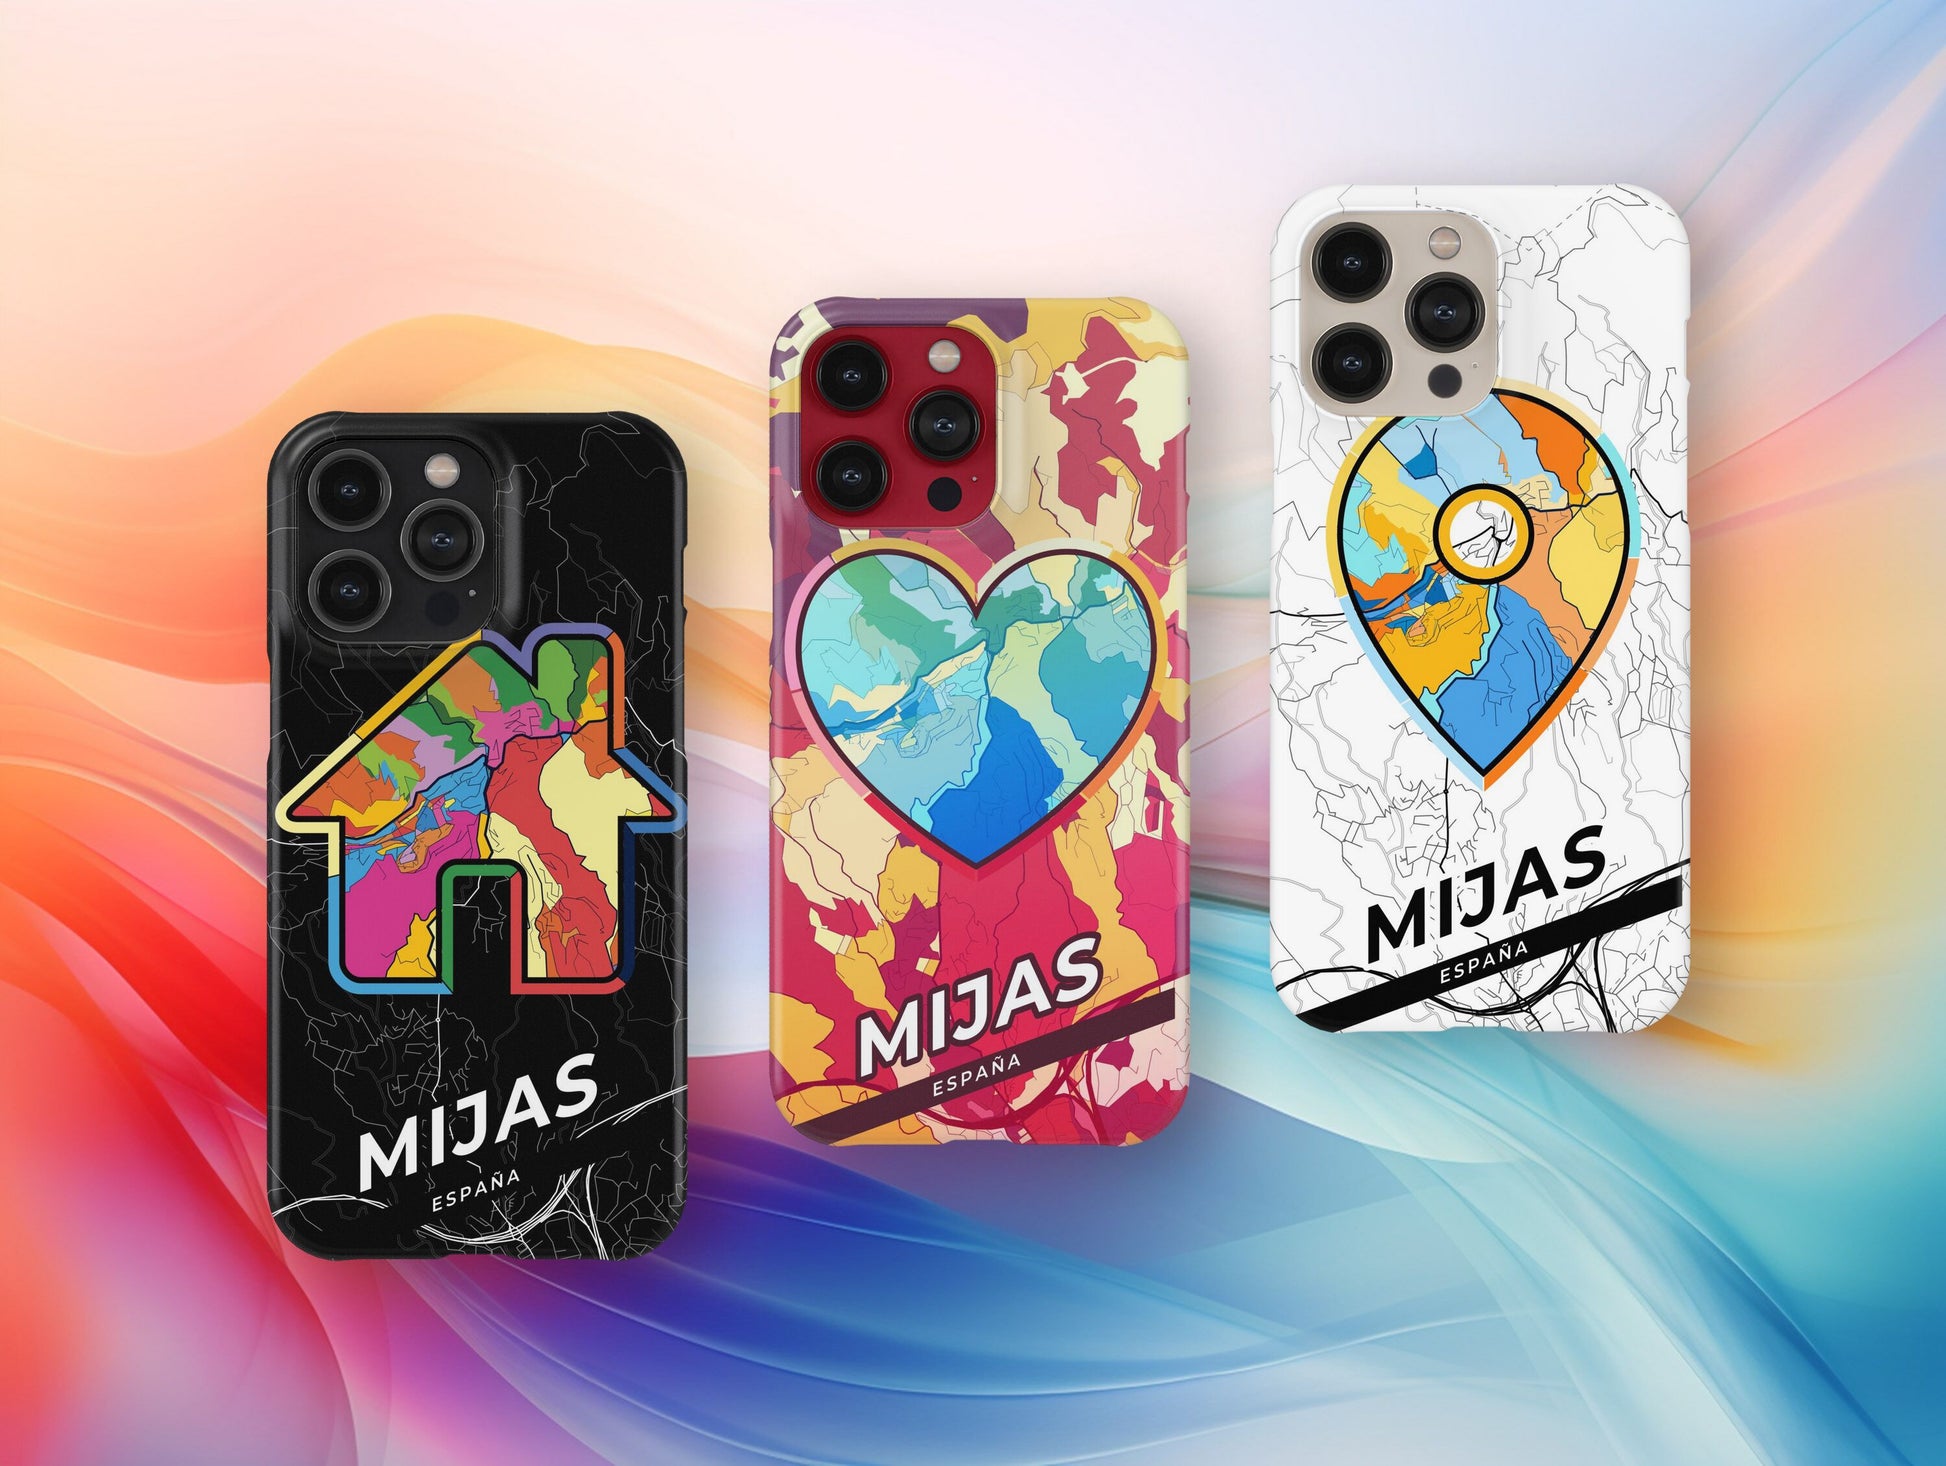 Mijas Spain slim phone case with colorful icon